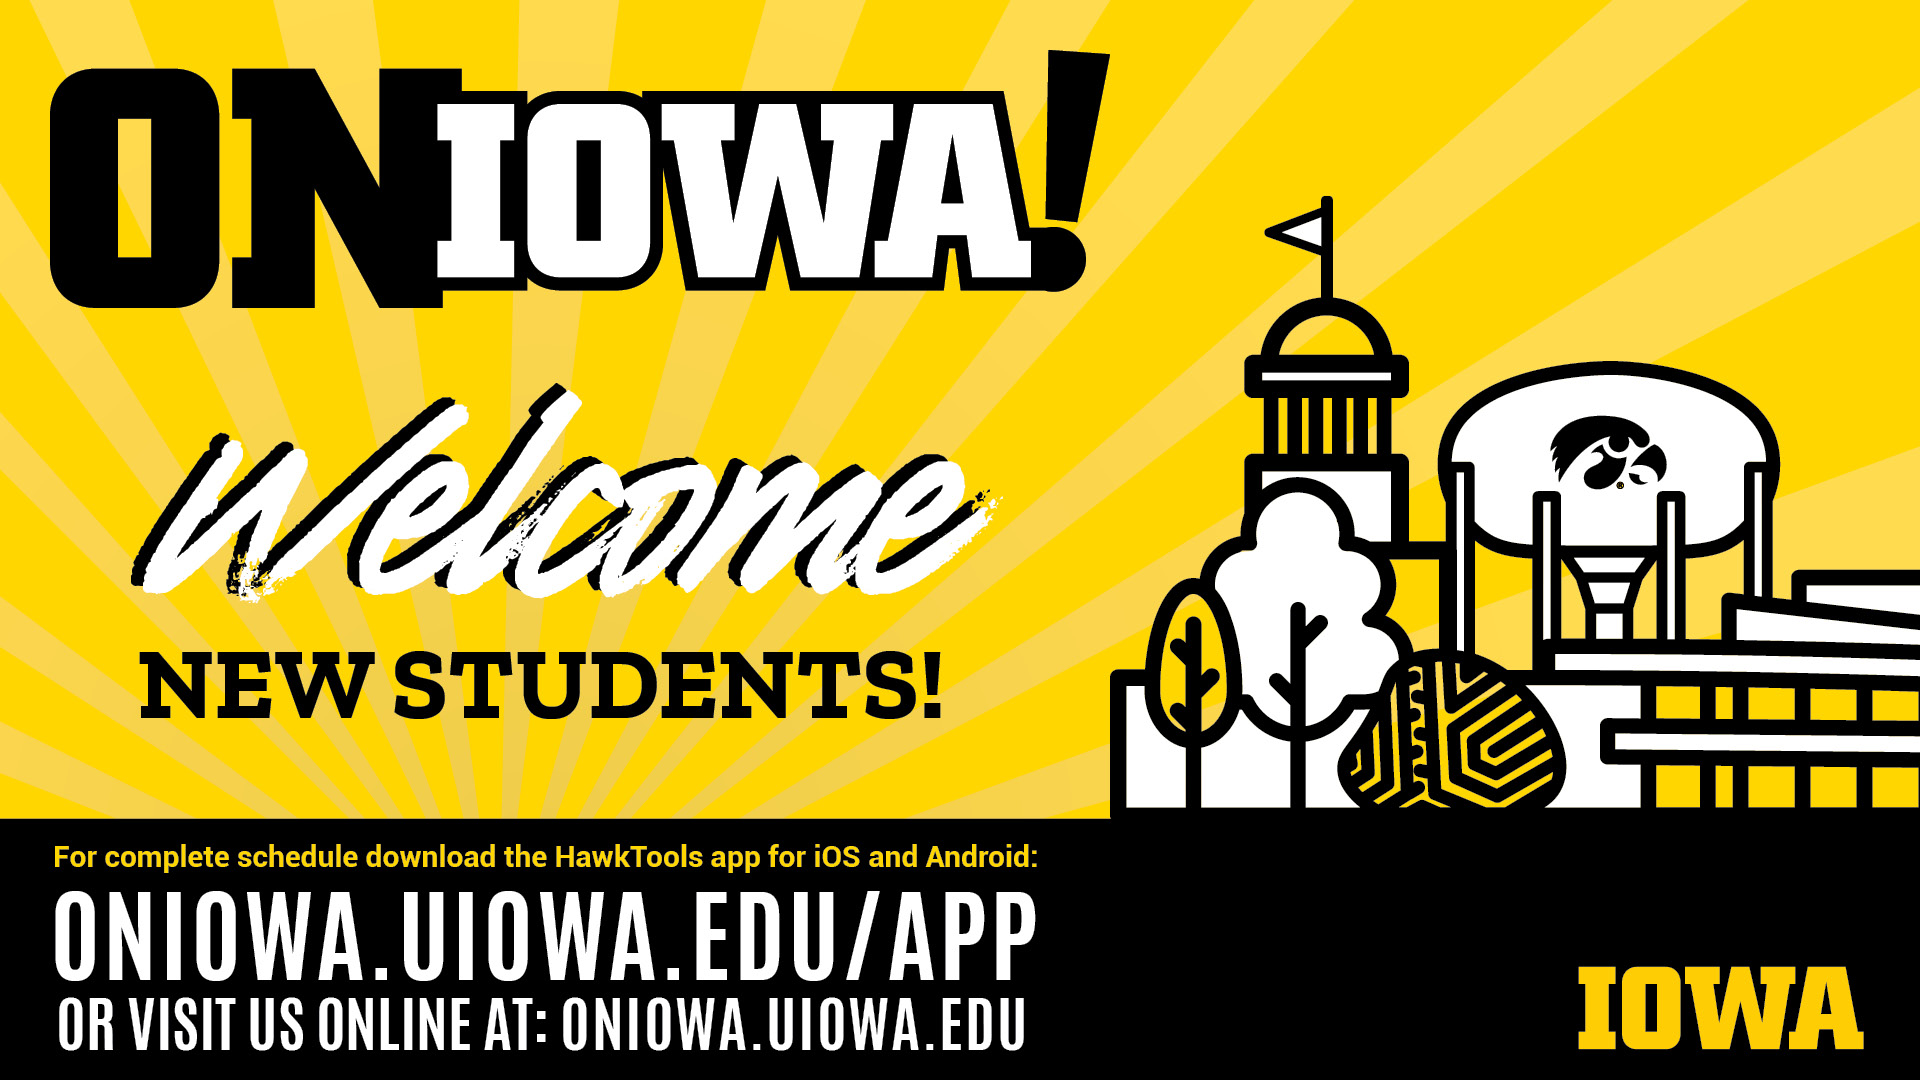 On Iowa! Welcome new students